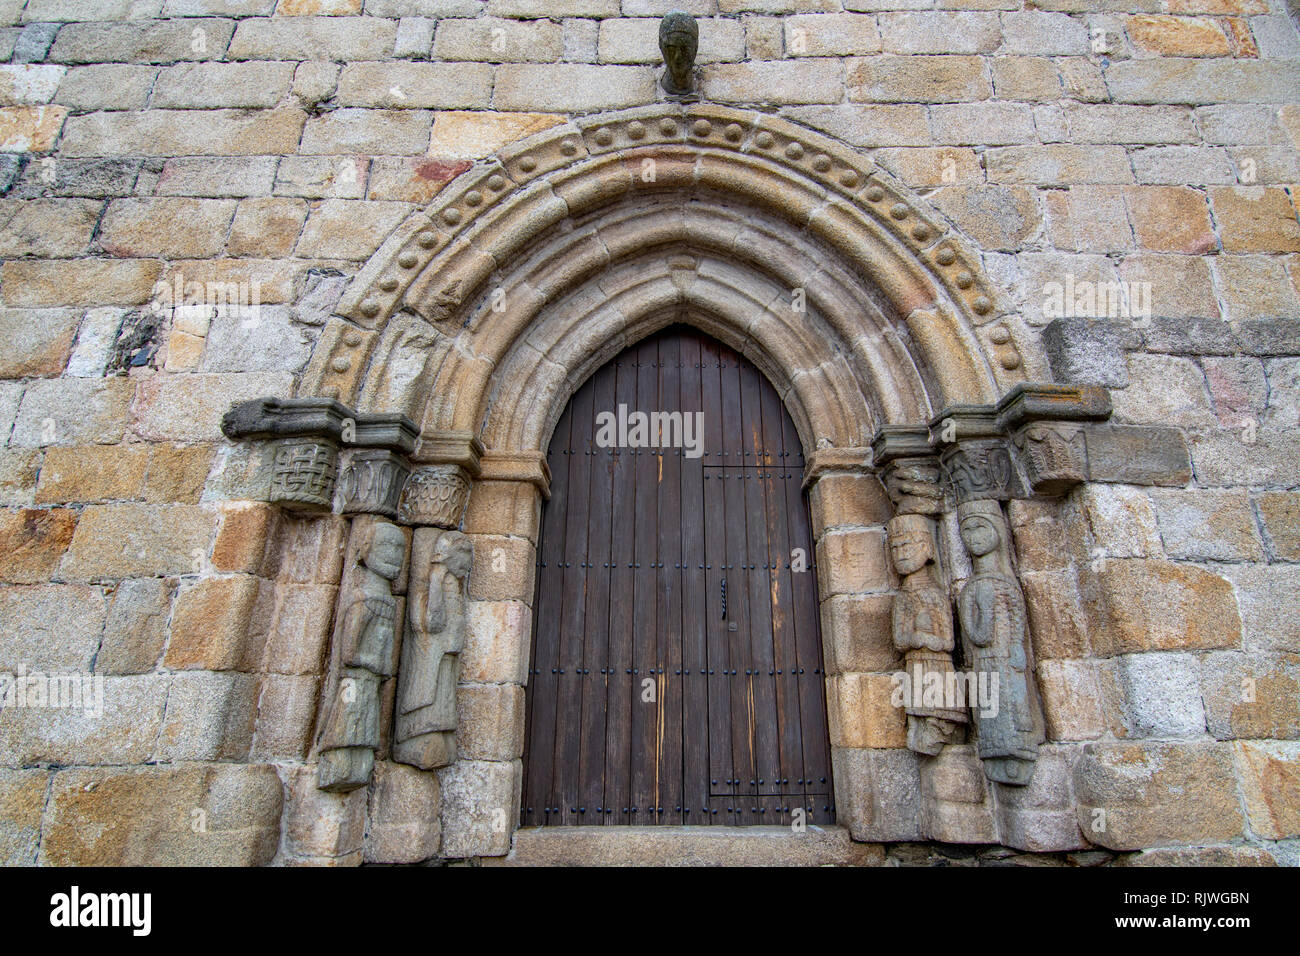 Puebla de Sanabria, Zamora, Spain; January 2017: detail of the entrance door to the church of Puebla de Sanabria Stock Photo